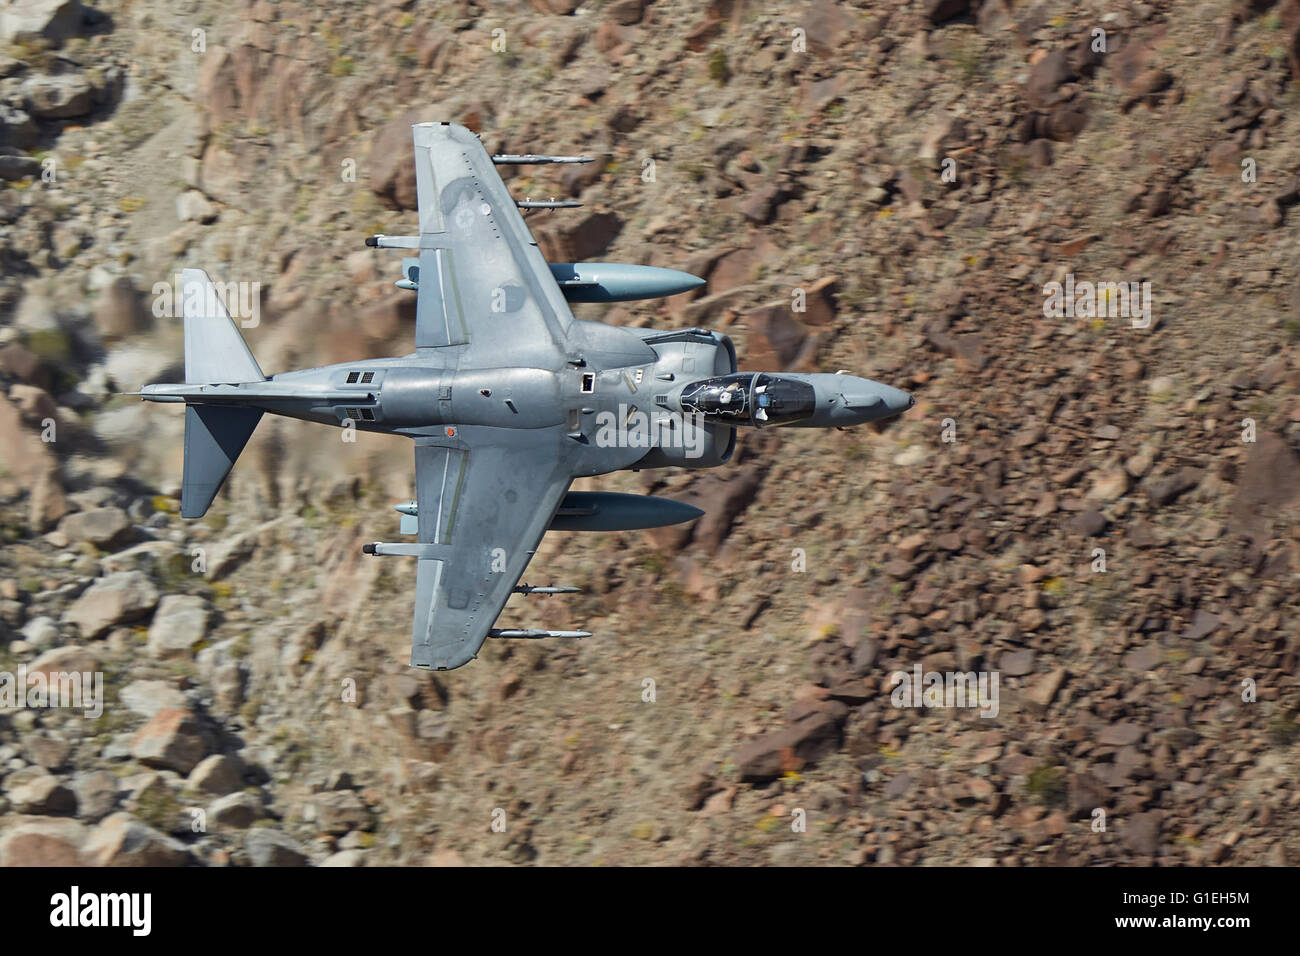 United States Marine Corps AV-8B Harrier II, Turning Hard As It Flies Low Through A Desert Canyon In The Mojave Desert, California, USA. Stock Photo